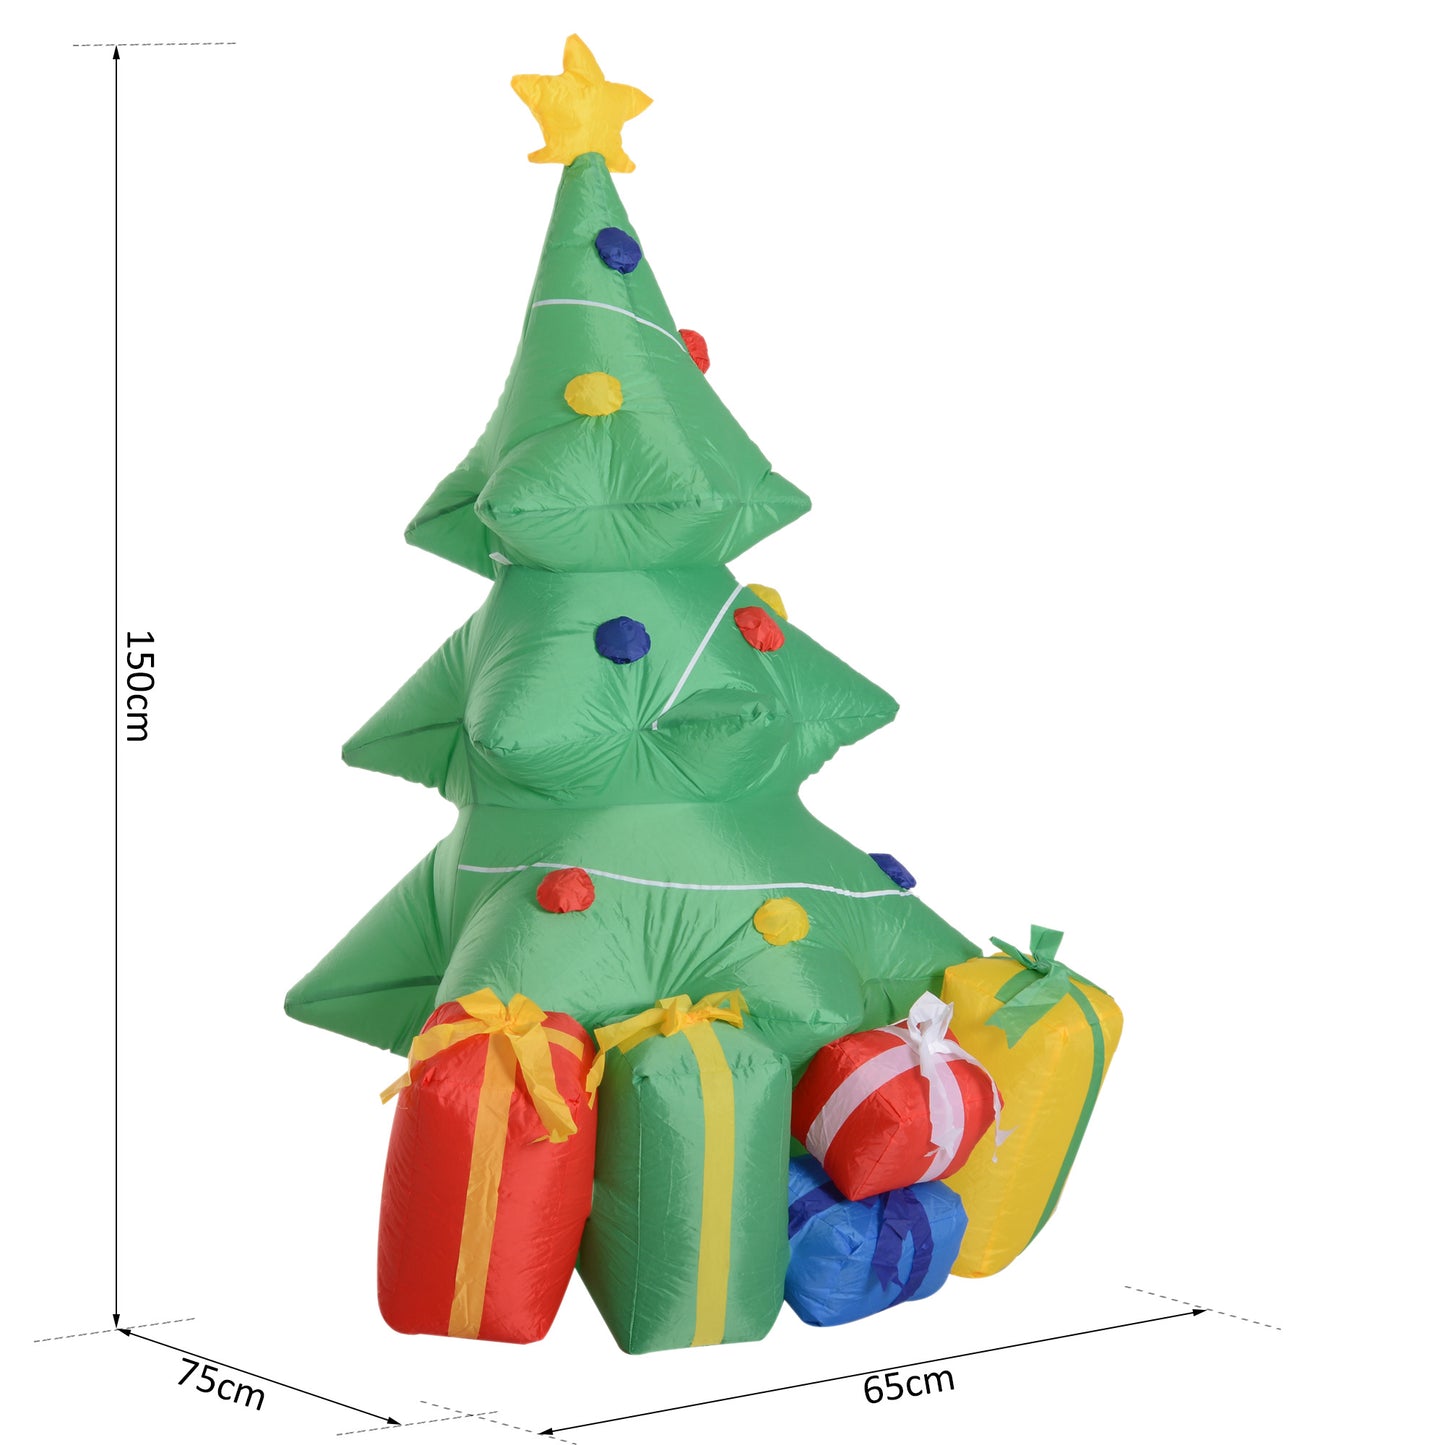 HOMCOM 1.5m Inflatable Christmas Tree Decoration W/LED lights, Polyester Fabric-Multicolour